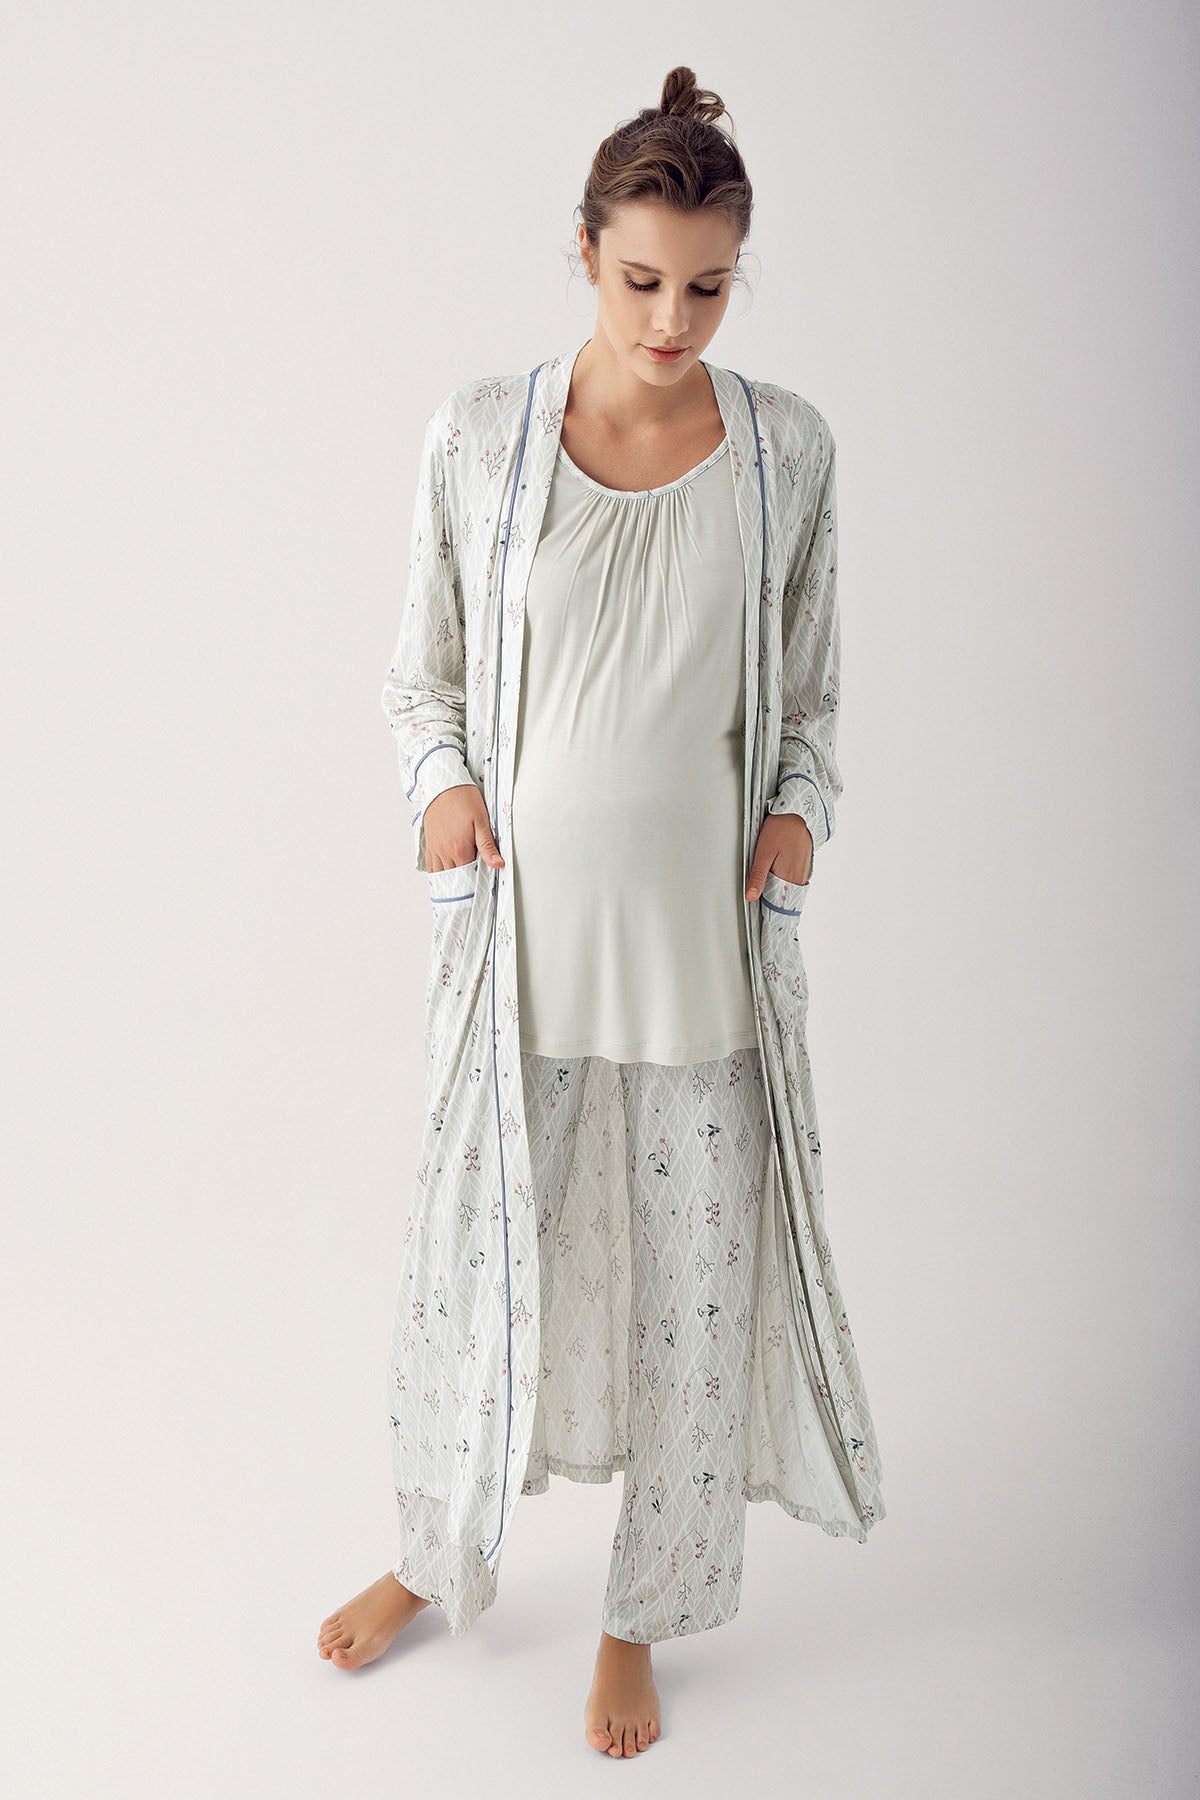 Shopymommy 2356 3-Pieces Maternity & Nursing Pajamas With Striped Robe